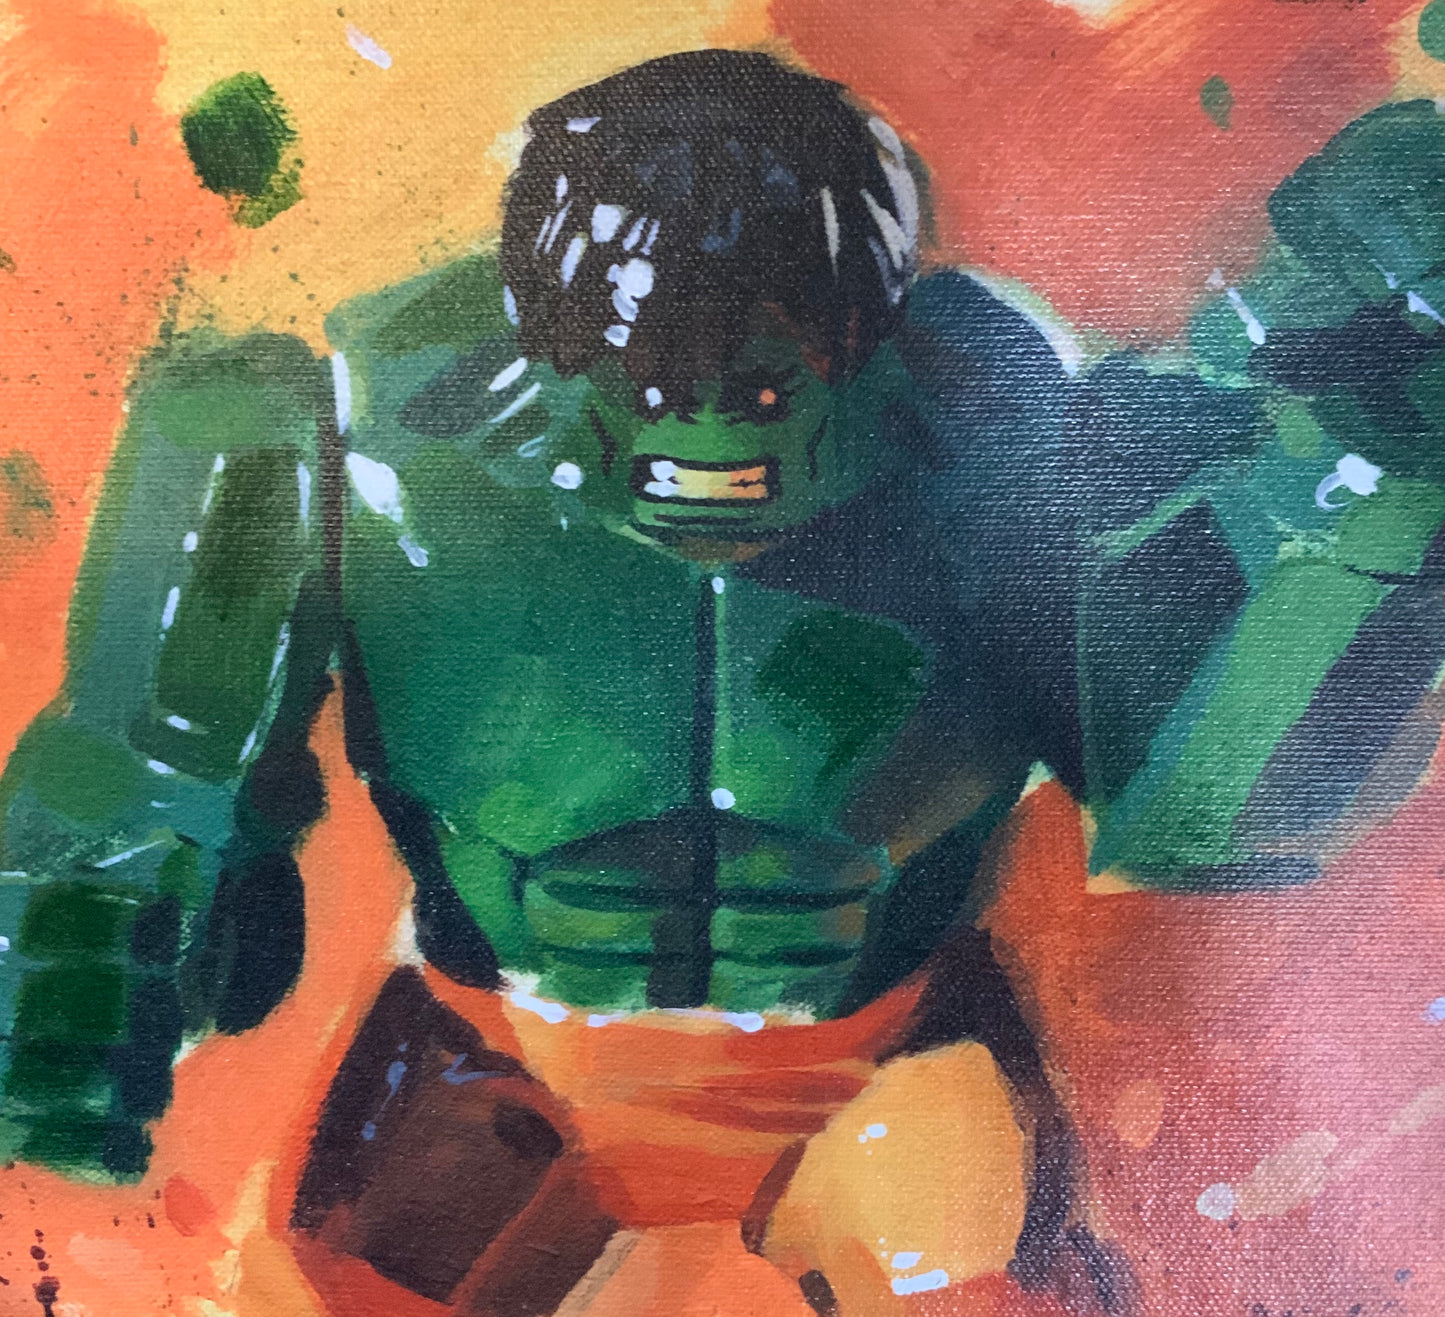 Hulk by James Paterson